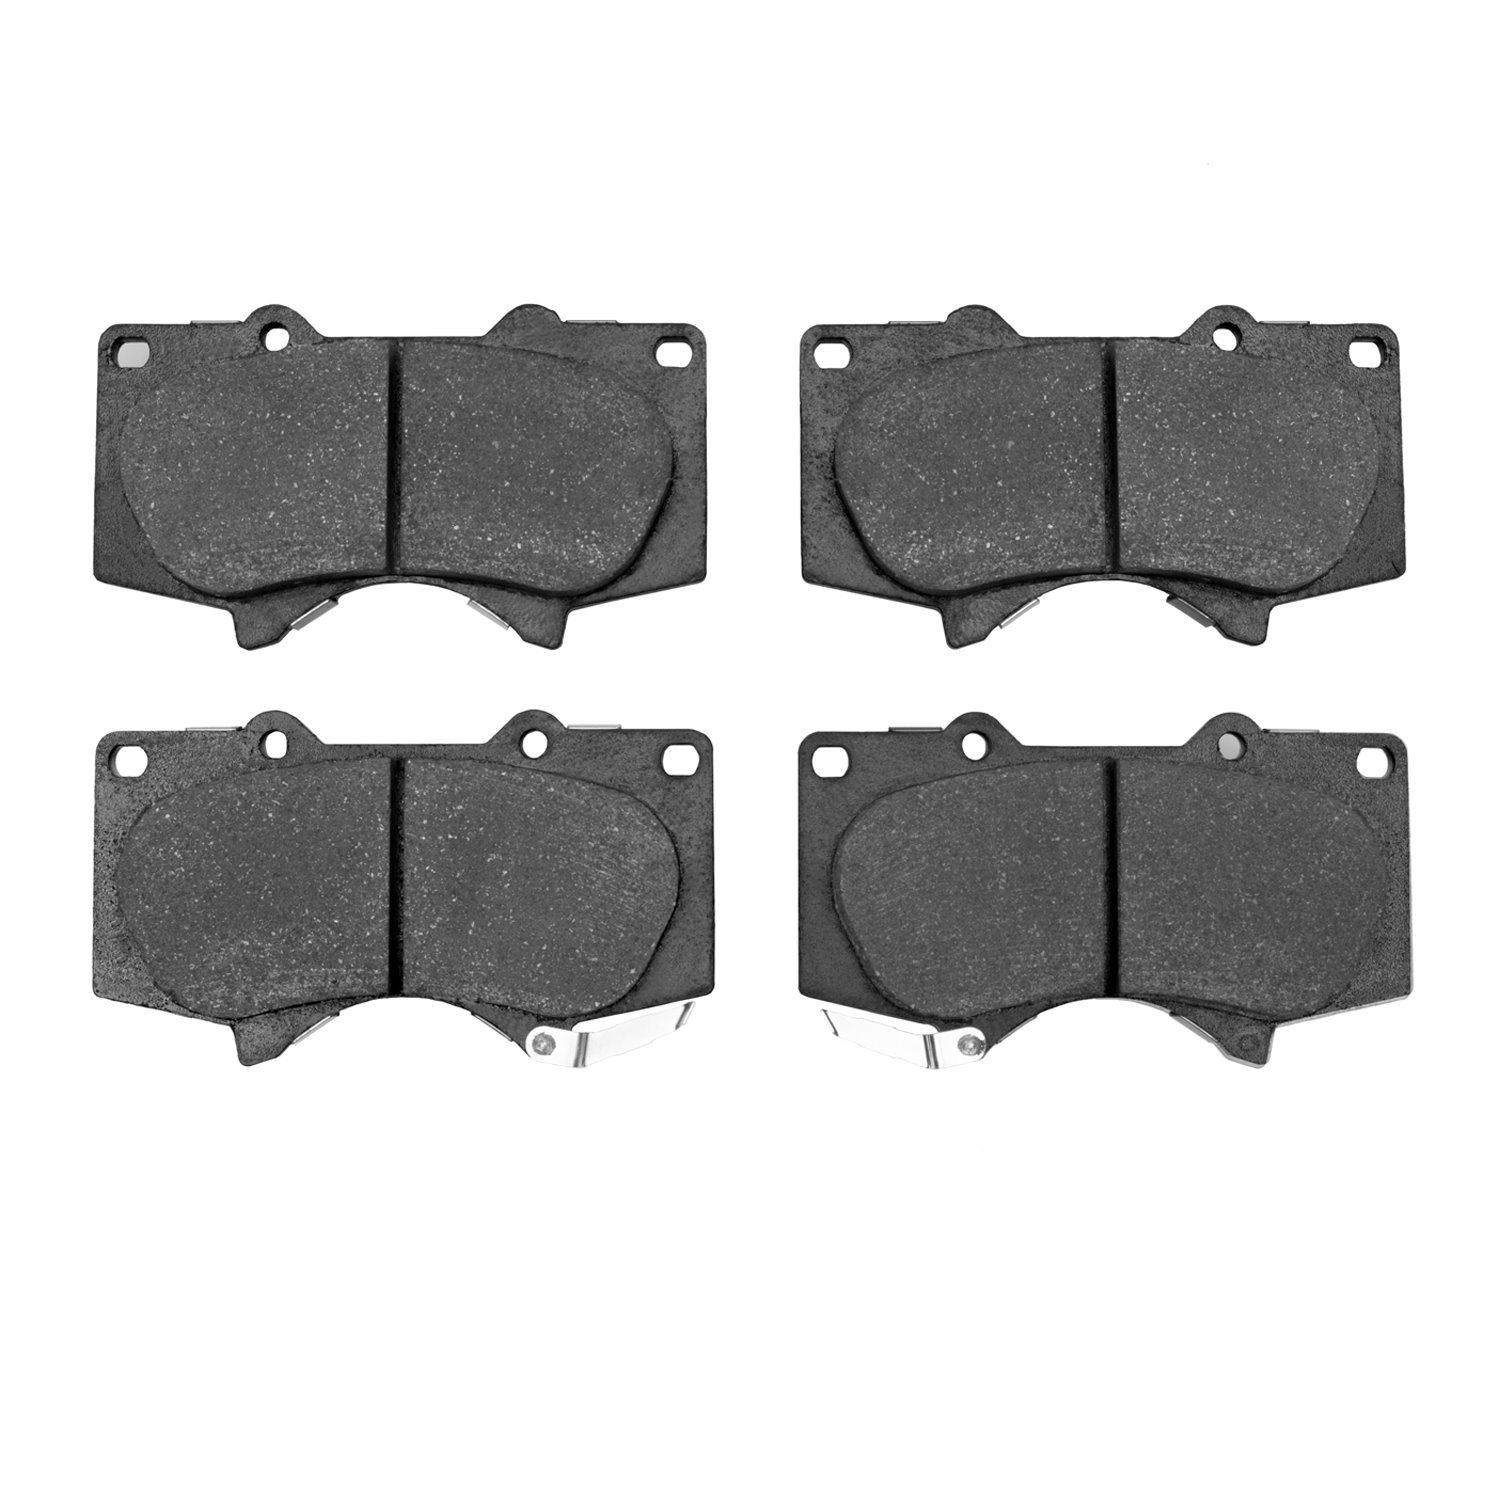 1400-0976-00 Ultimate-Duty Brake Pads Kit, Fits Select Multiple Makes/Models, Position: Front